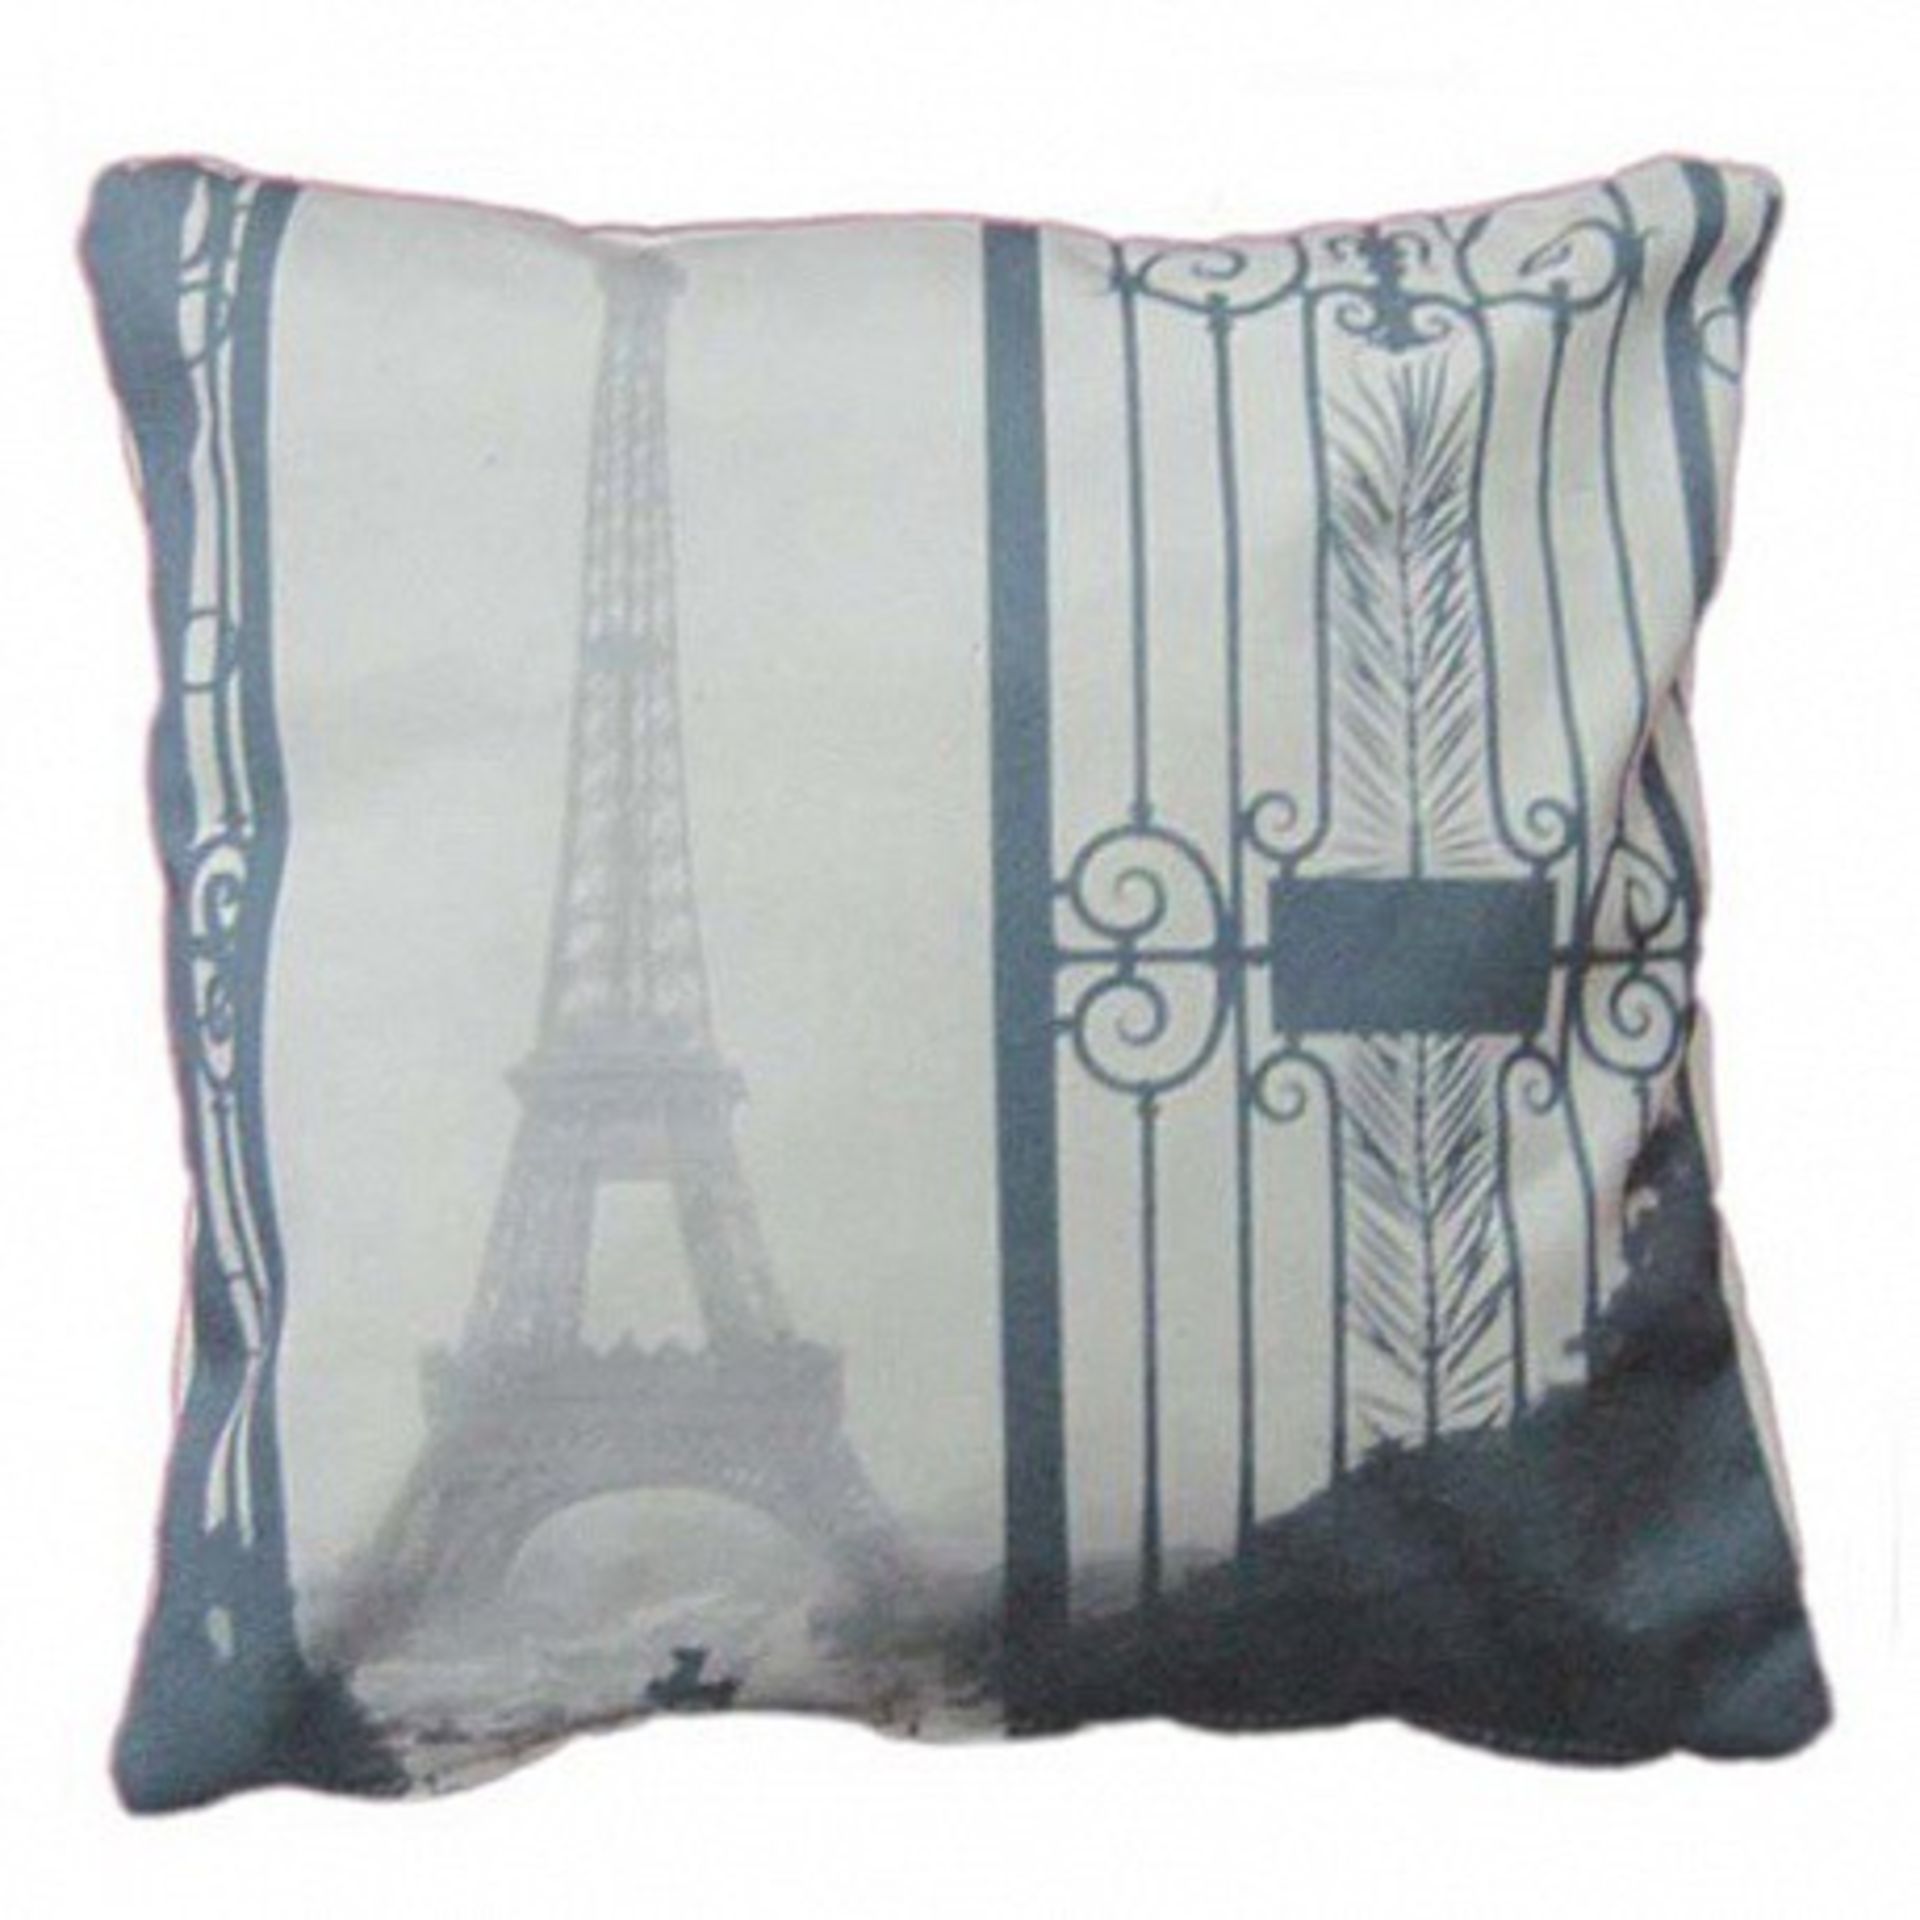 Emelie's Eiffel Tower Cushion 45 x 45 x 15cm